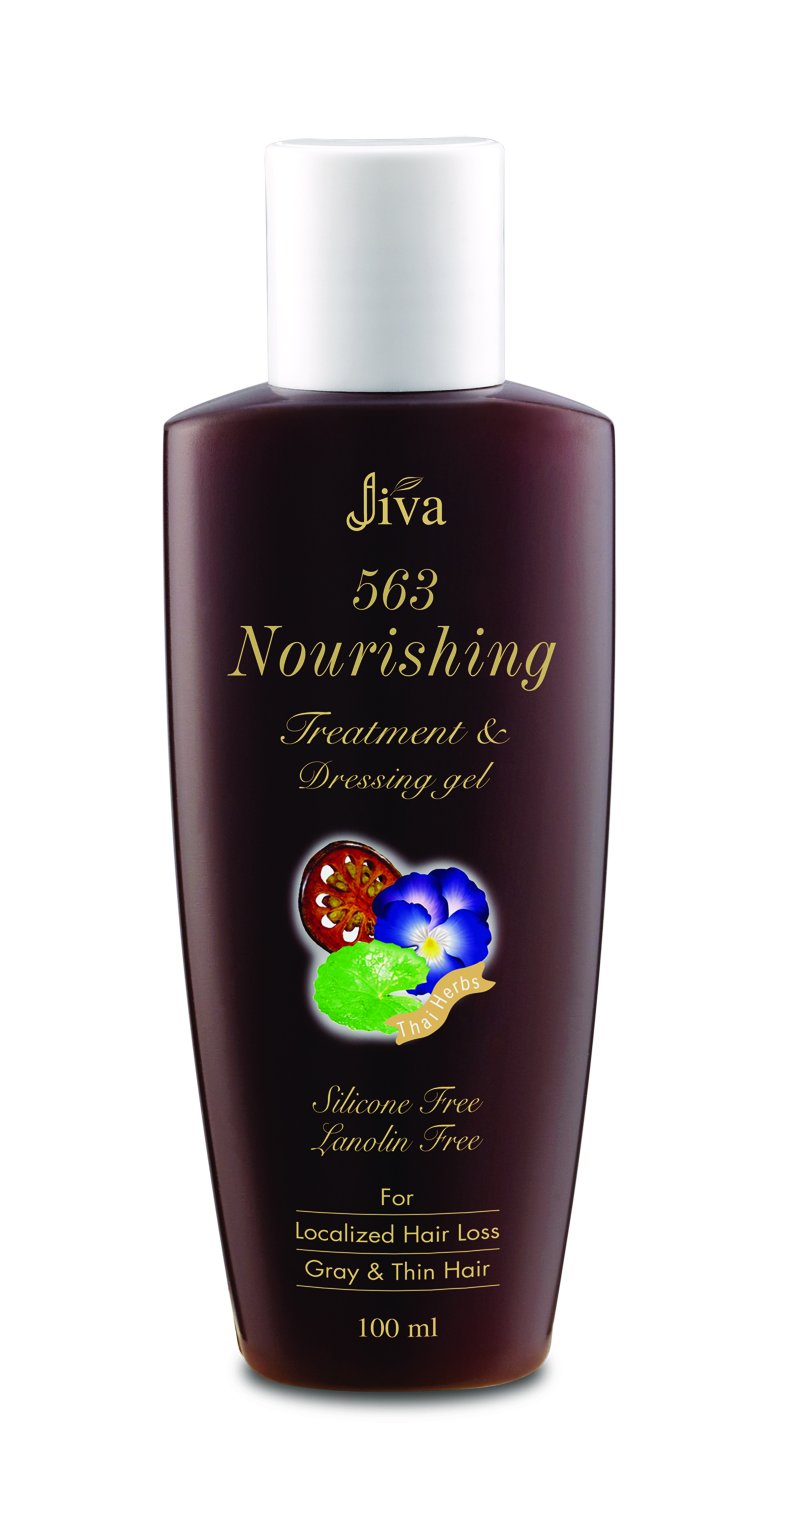 JIVA Nourishing Treatment and Dressing Gel - จีวา นอริชชิ่ง ทรีทเม้นท์ แอนด์ เดรซซิ่ง เจล